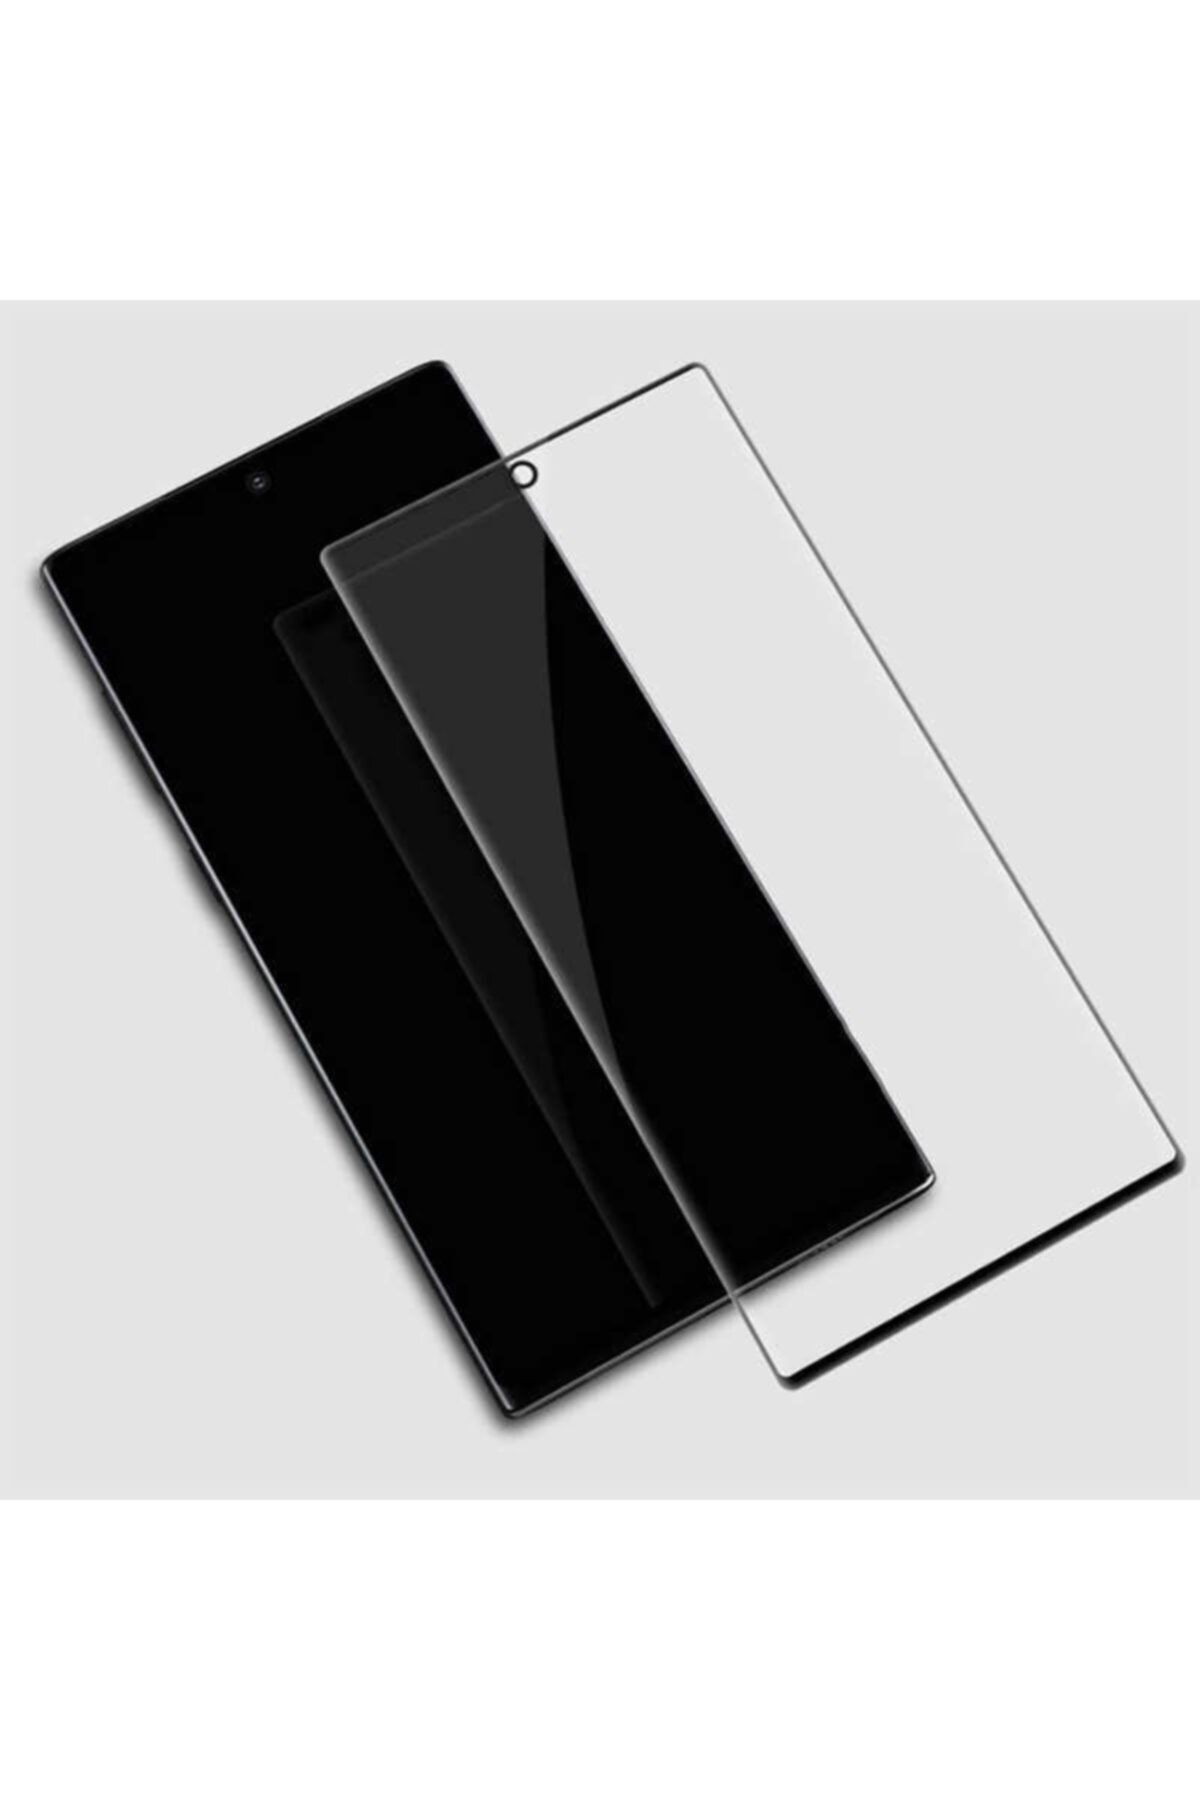 Fibaks Galaxy Note 10 Uyumlu Süper Pet Ekran Koruyucu Jelatin